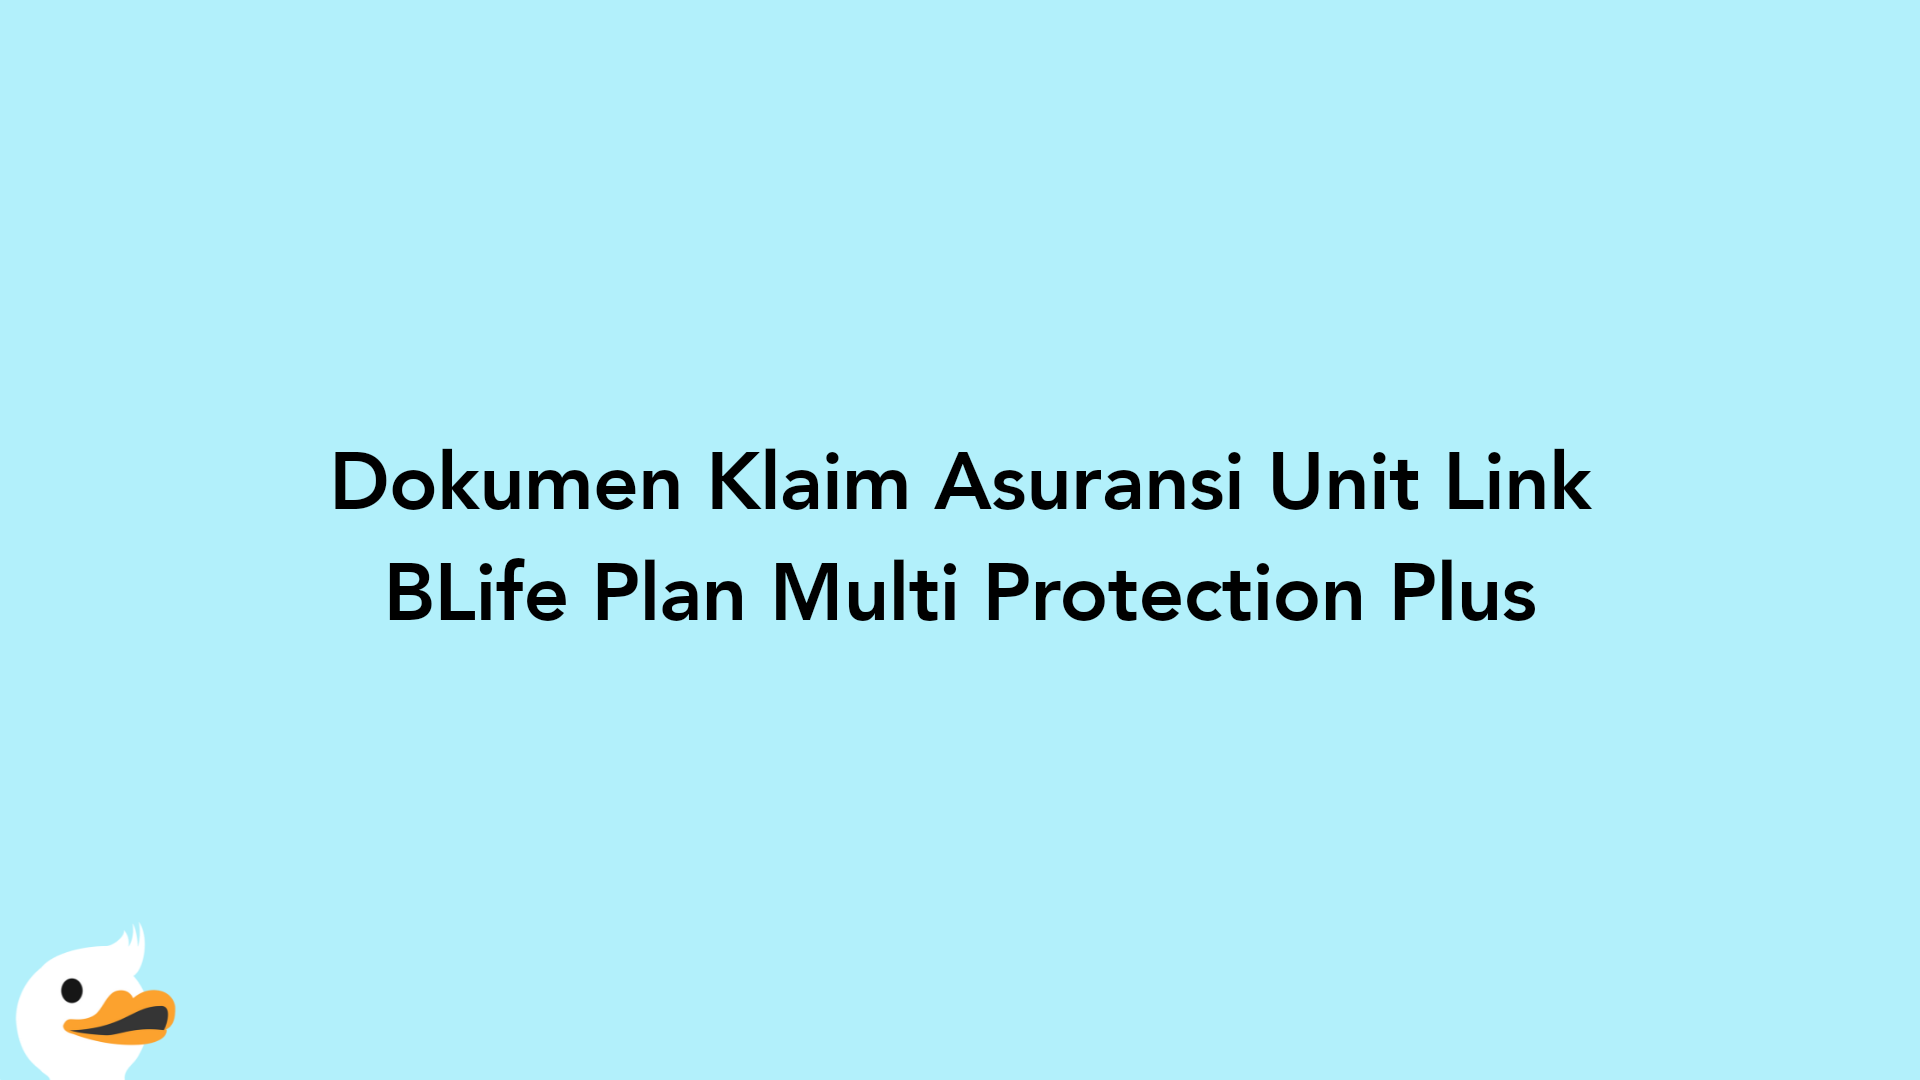 Dokumen Klaim Asuransi Unit Link BLife Plan Multi Protection Plus